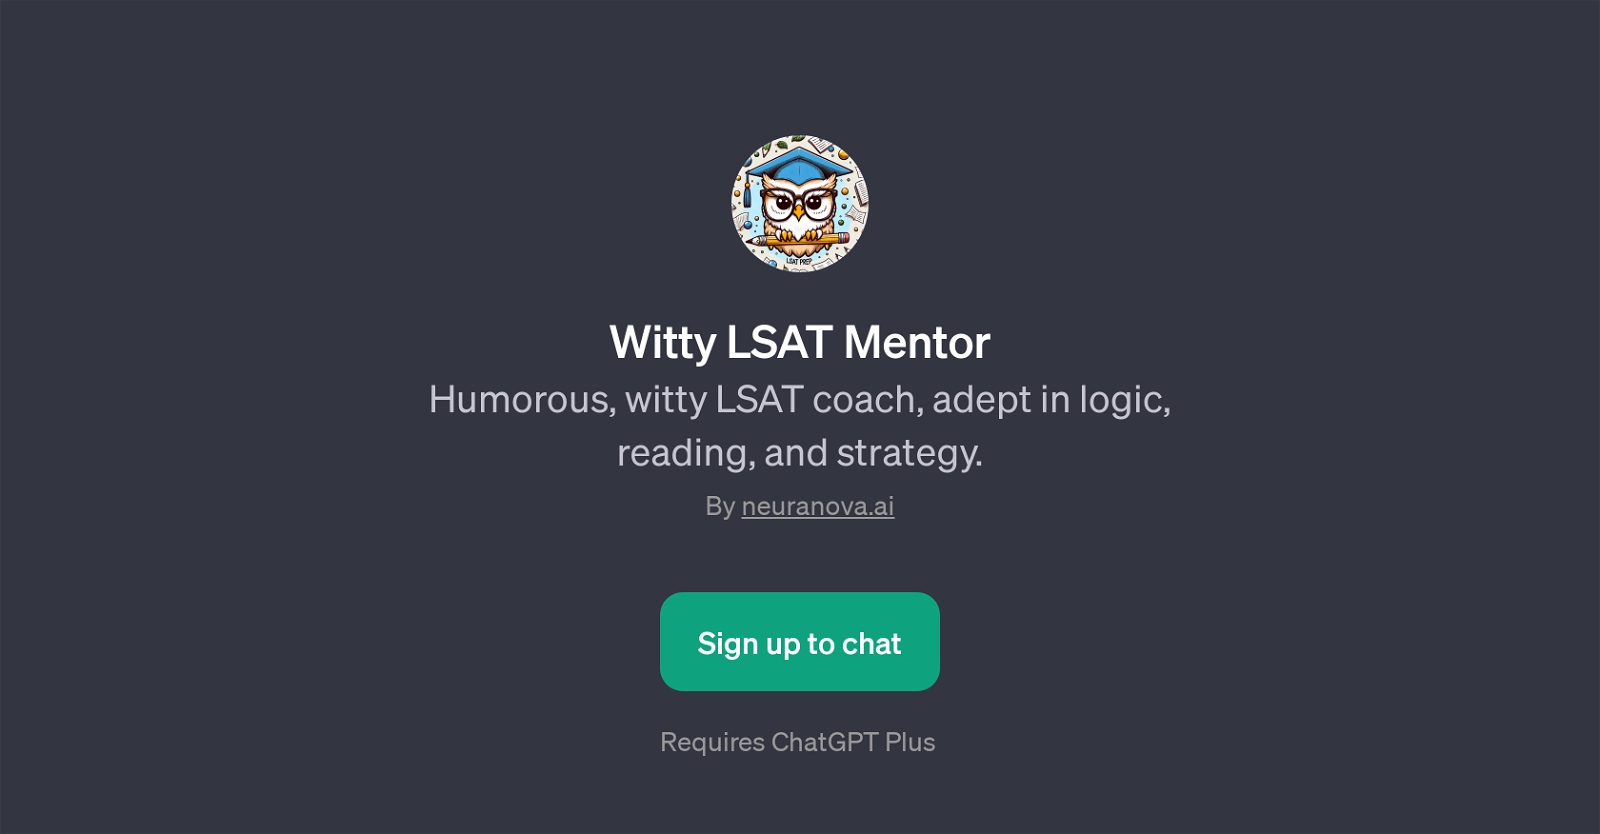 Witty LSAT Mentor website